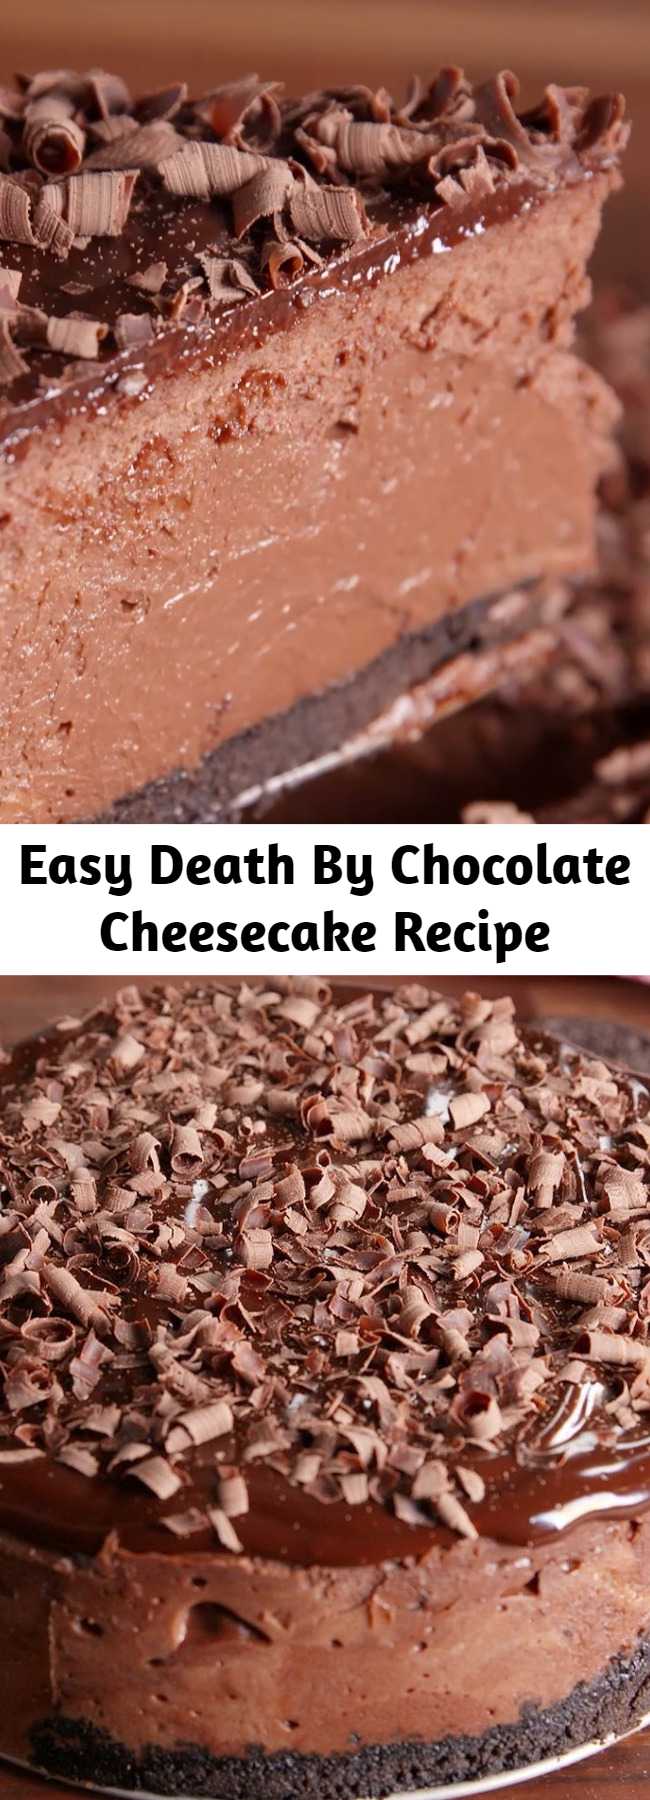 Easy Death By Chocolate Cheesecake Recipe - Easy Death By Chocolate Cheesecake Recipe - SO. MUCH. CHOCOLATE. #easy #recipe #deathbychocolate #cheesecake #chocolatecheesecake #chocolate #dessert #sweet #creamcheese #bake #oven #ganache